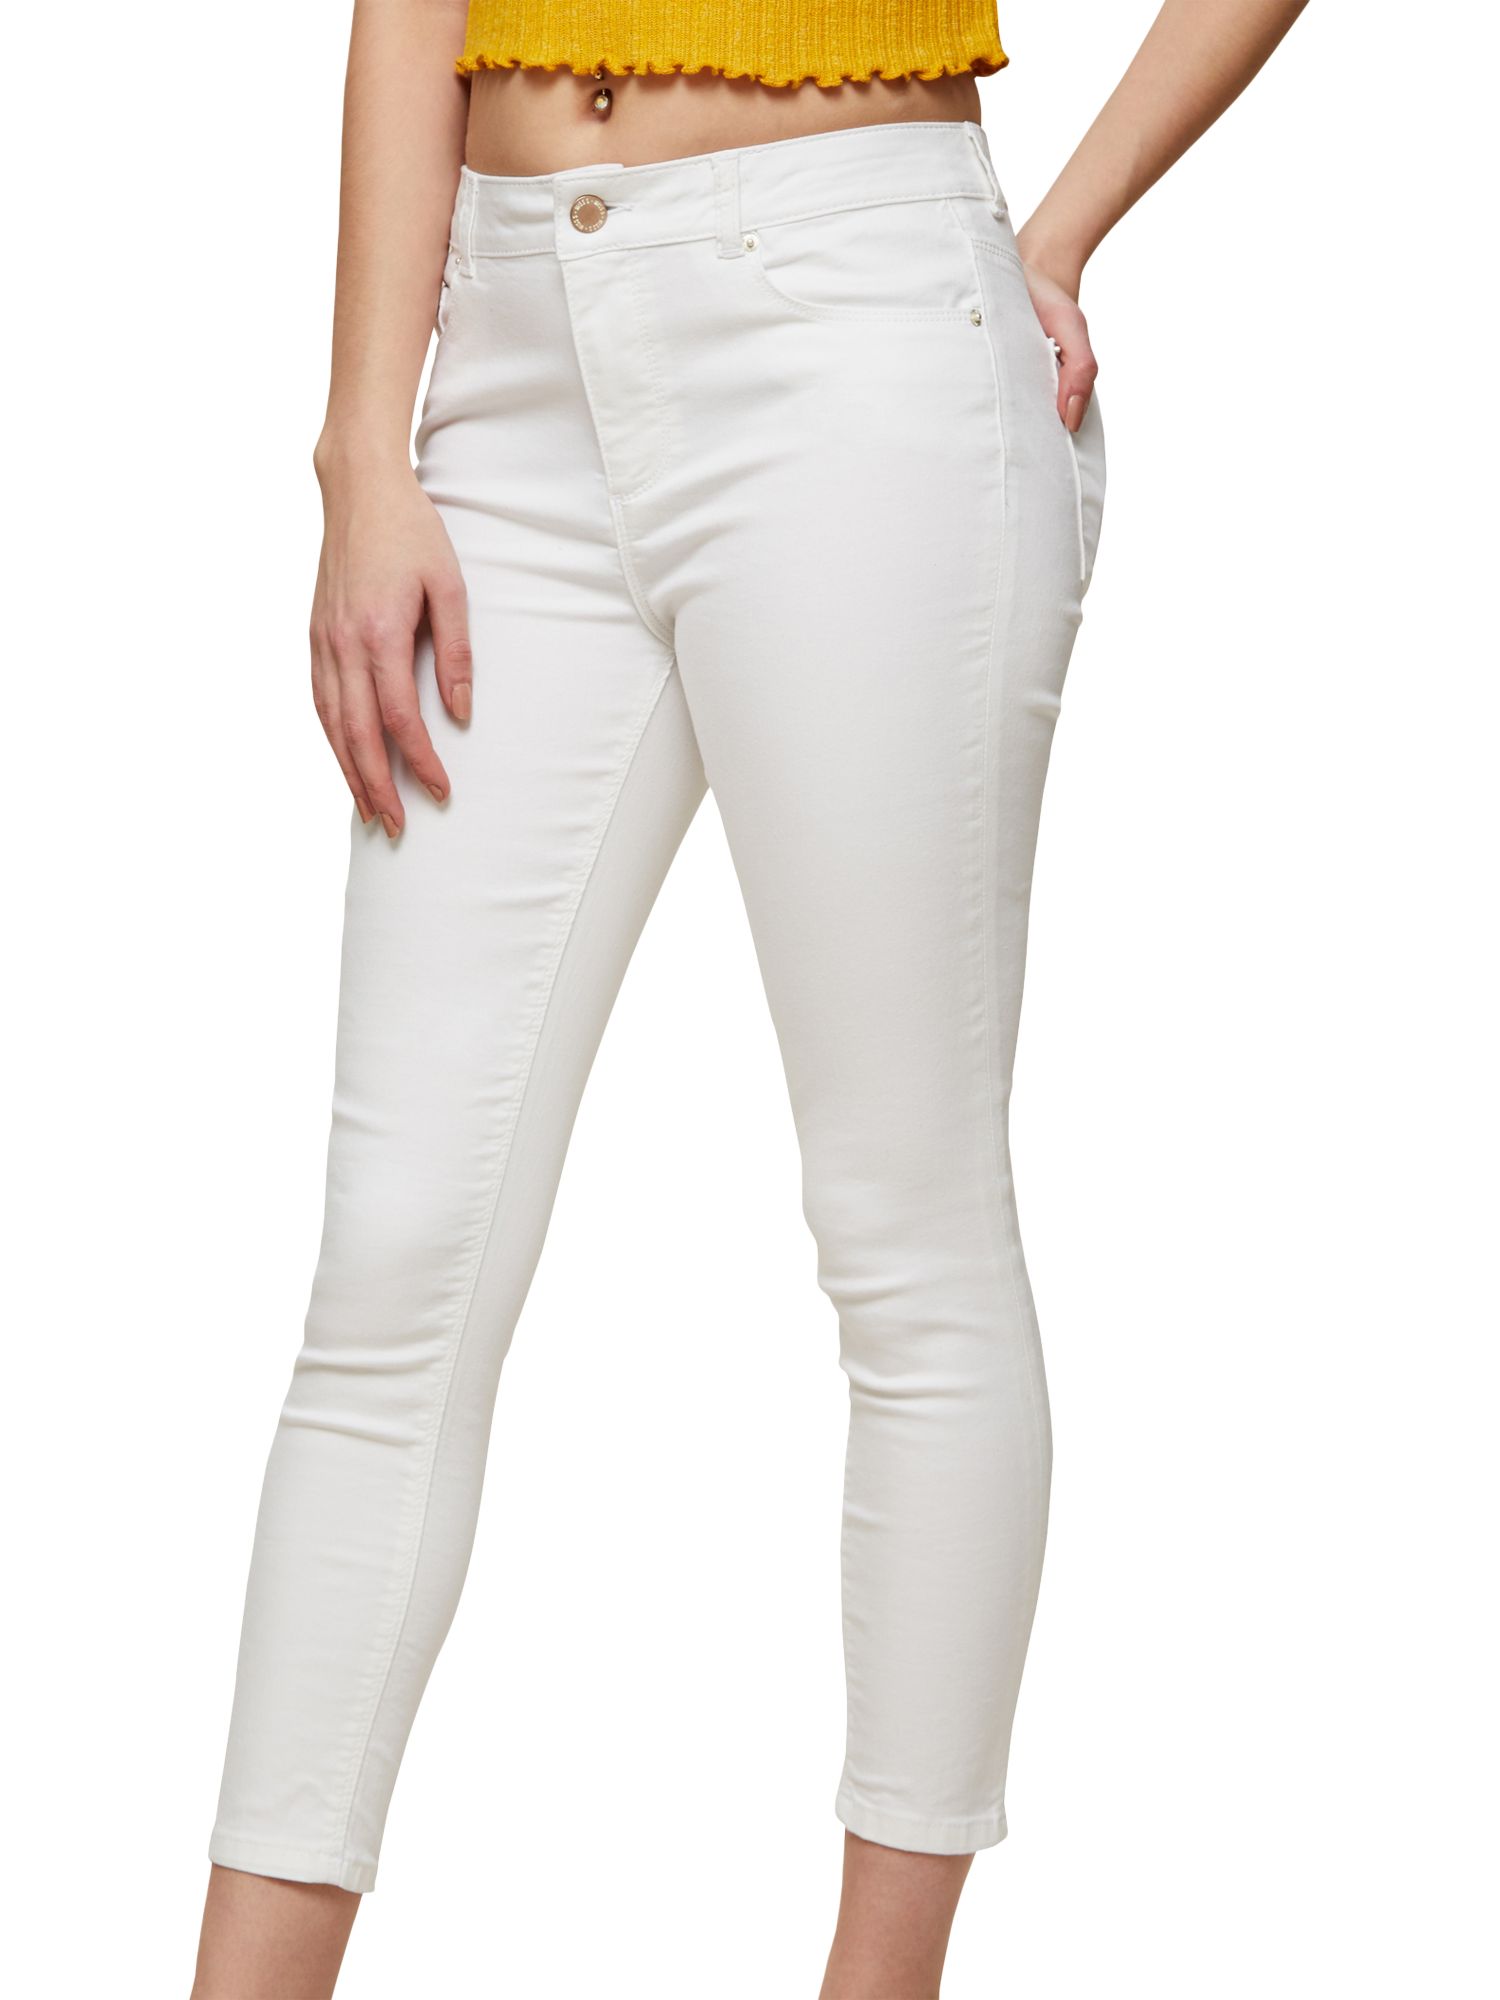 petite white jeans